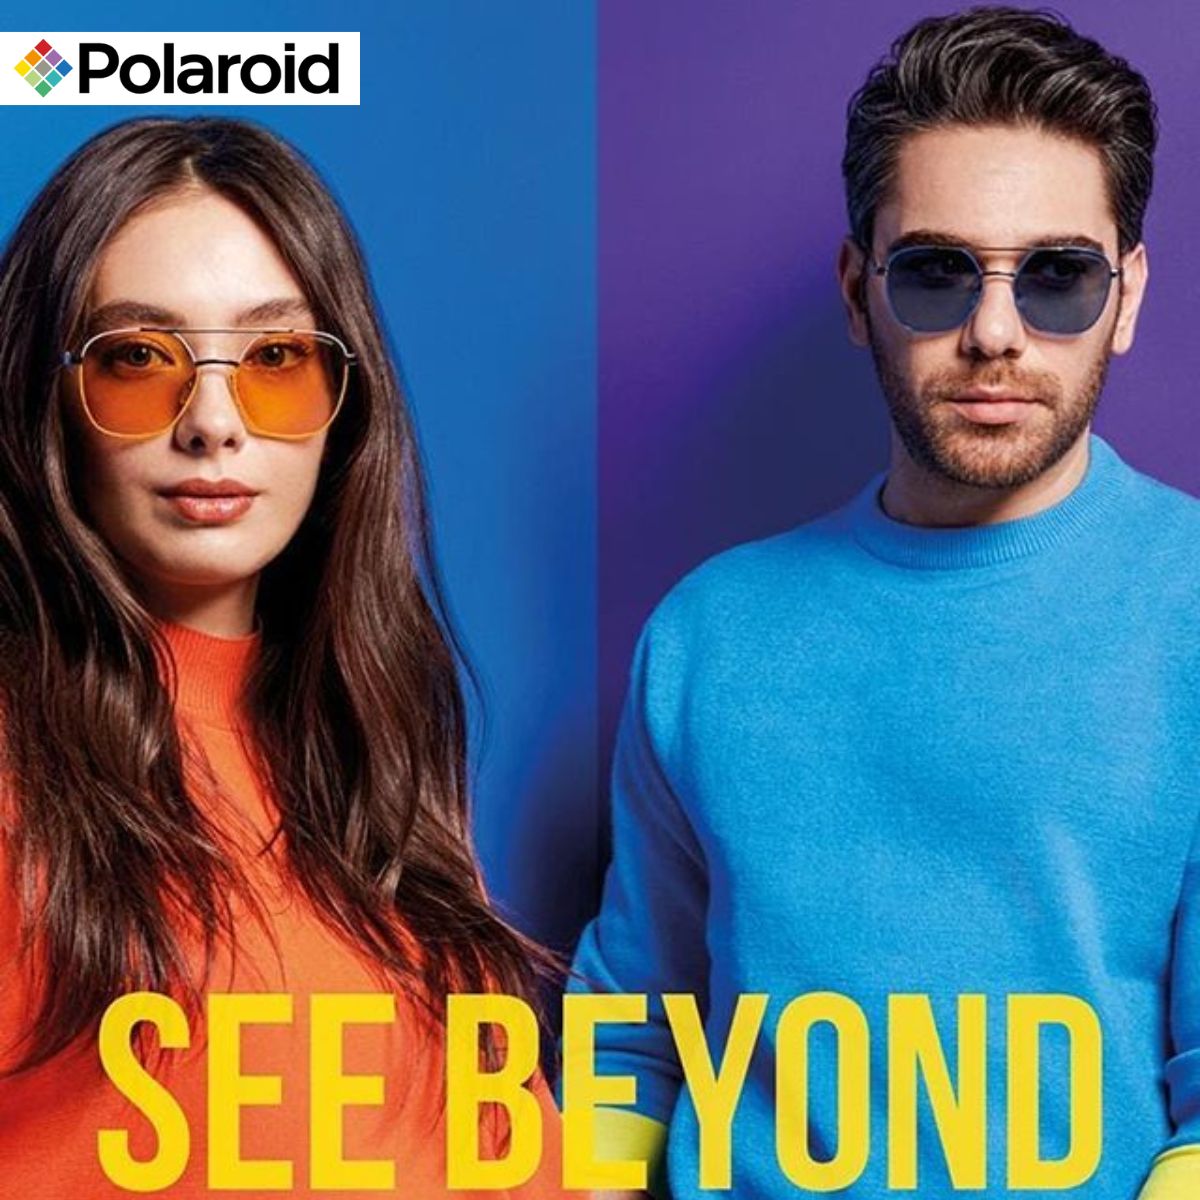 "Buy Latest Polaroid Eyewear Sunglasses For Men's And Women's At Optorium"